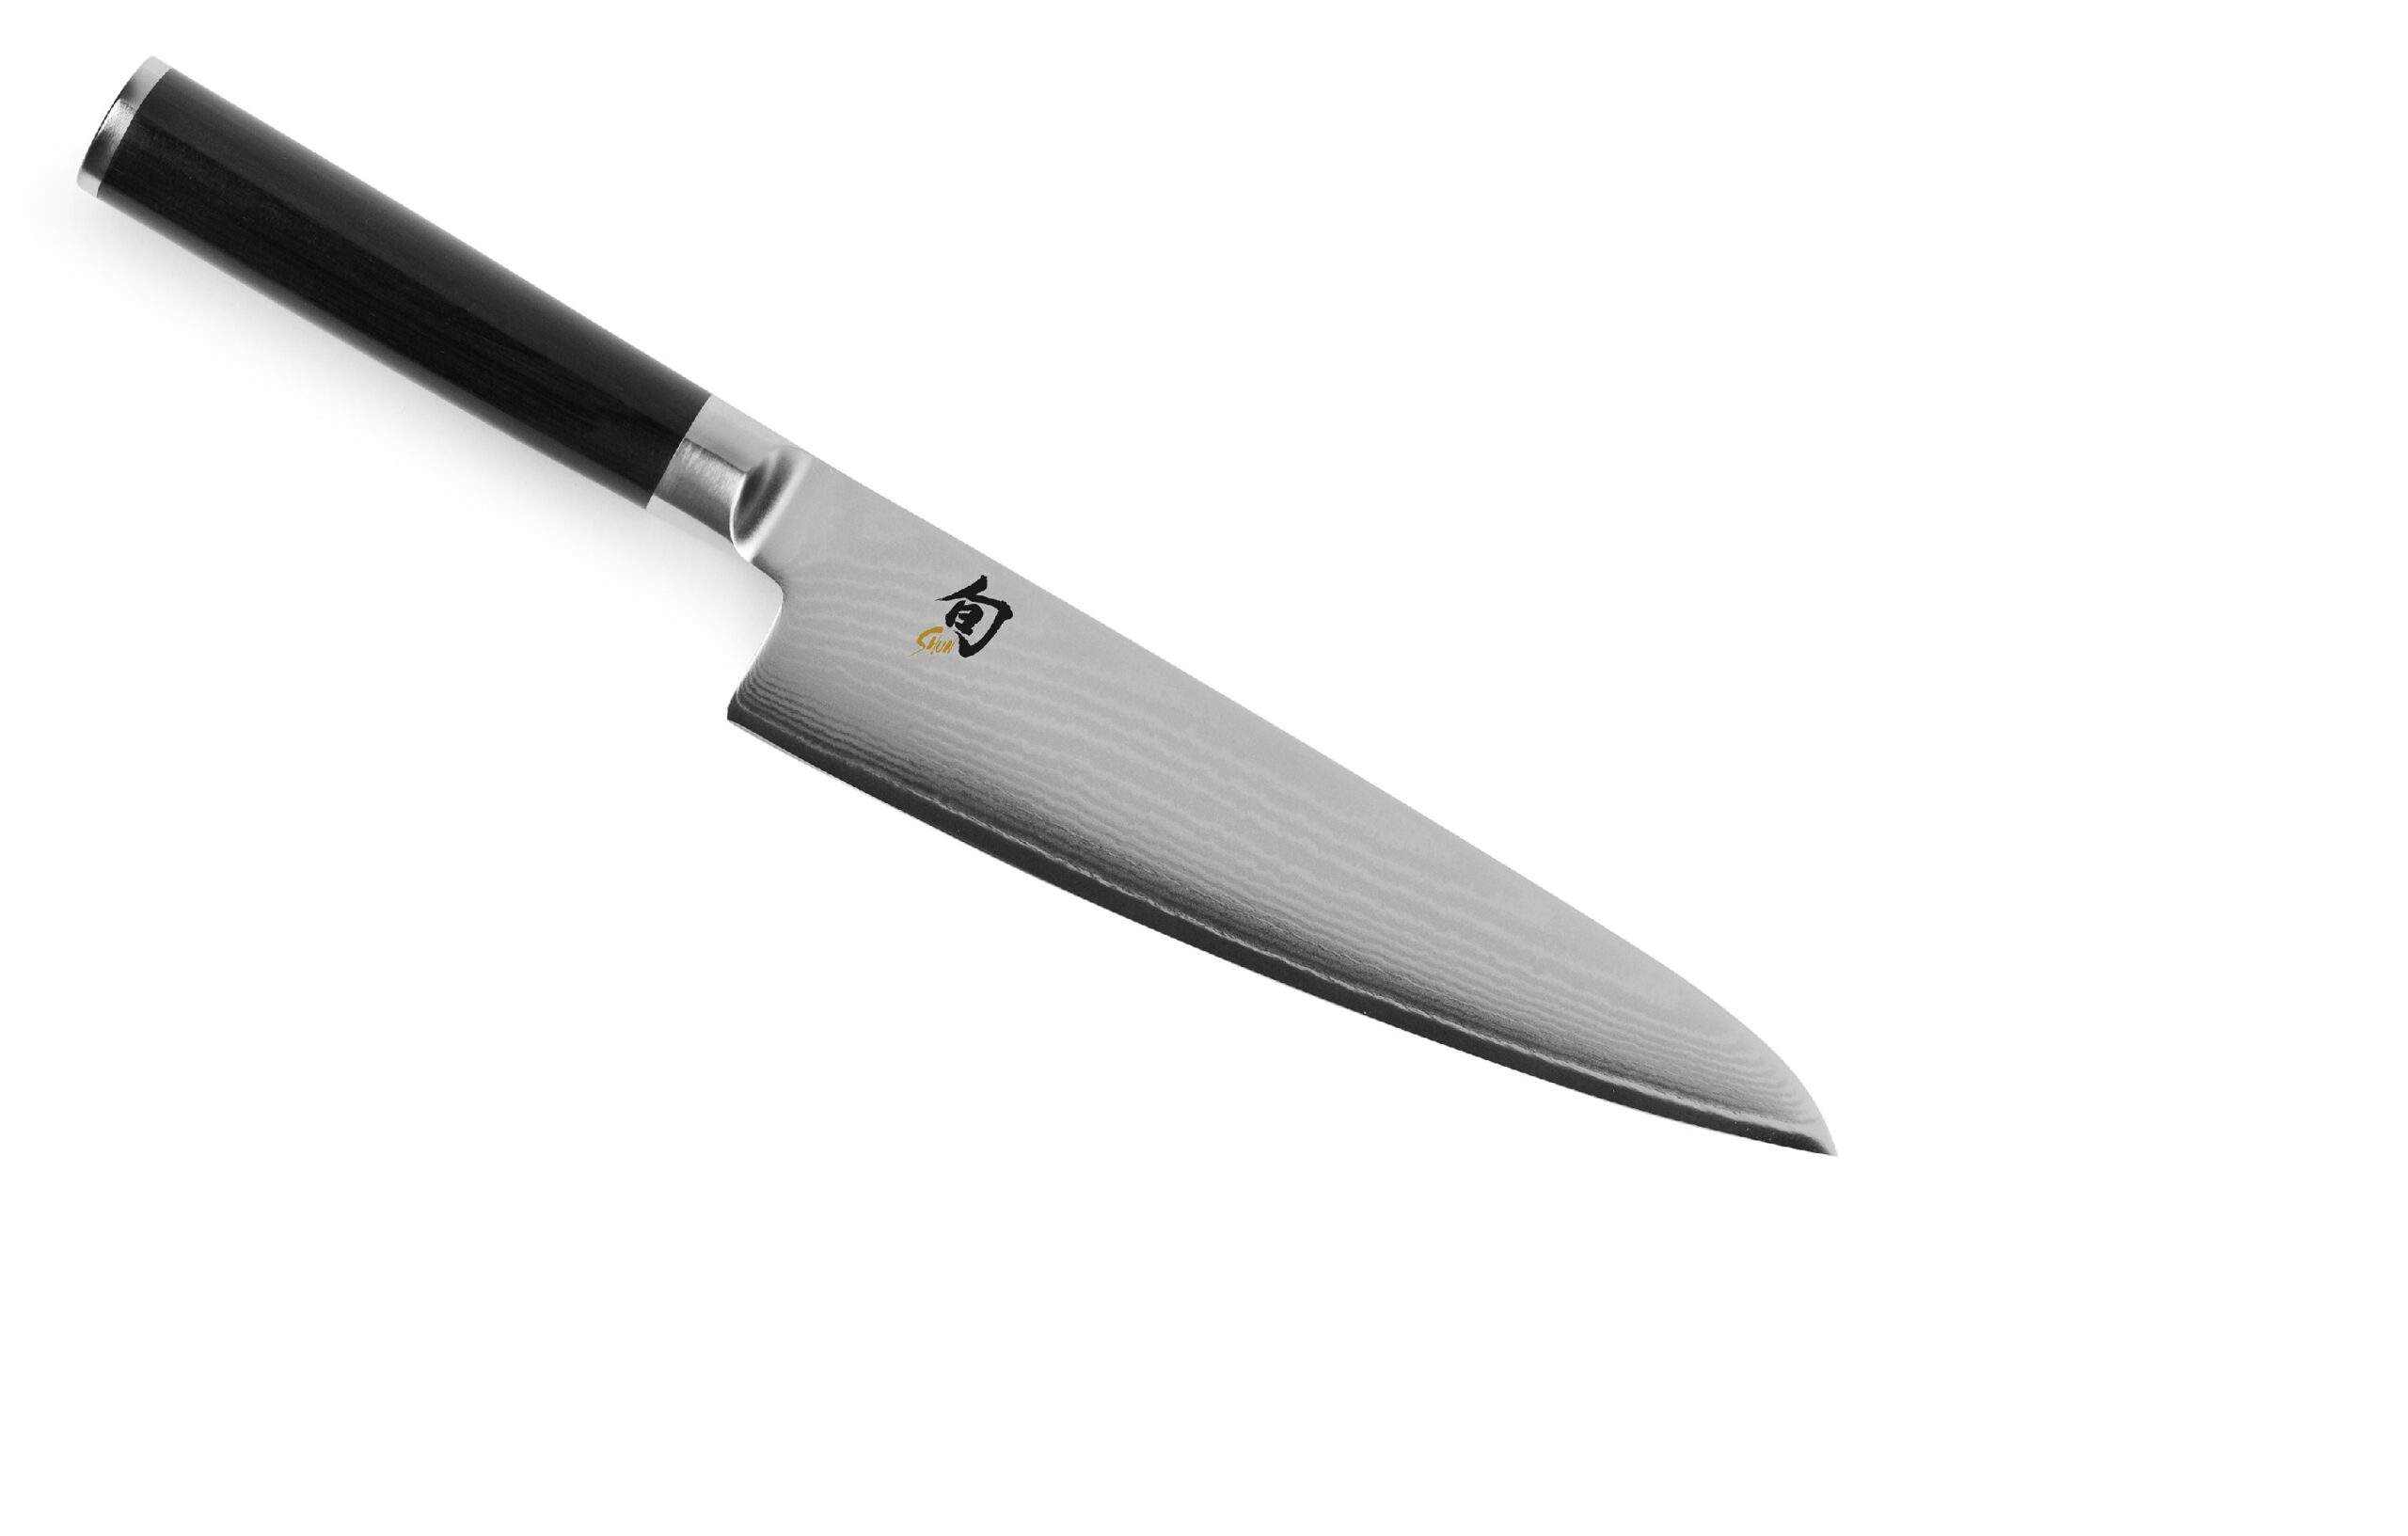 https://heimerdingercutlery.com/wp-content/uploads/2012/04/KRSW-DM0707-Shun-Classic-Chef-Knife-10-Inch-by-Kershaw-scaled.jpg